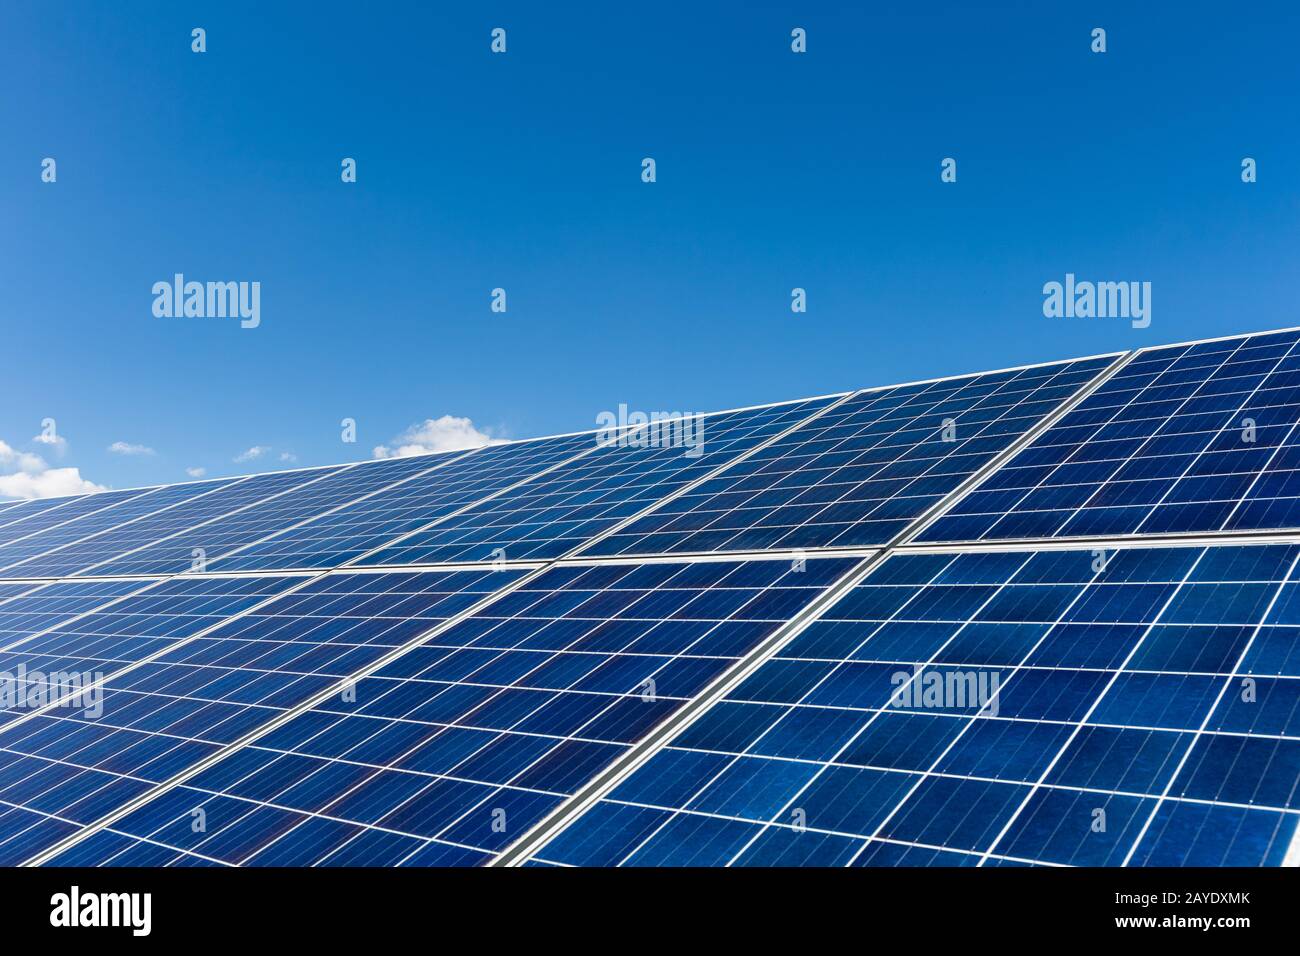 solar panels against a blue sky Stock Photo